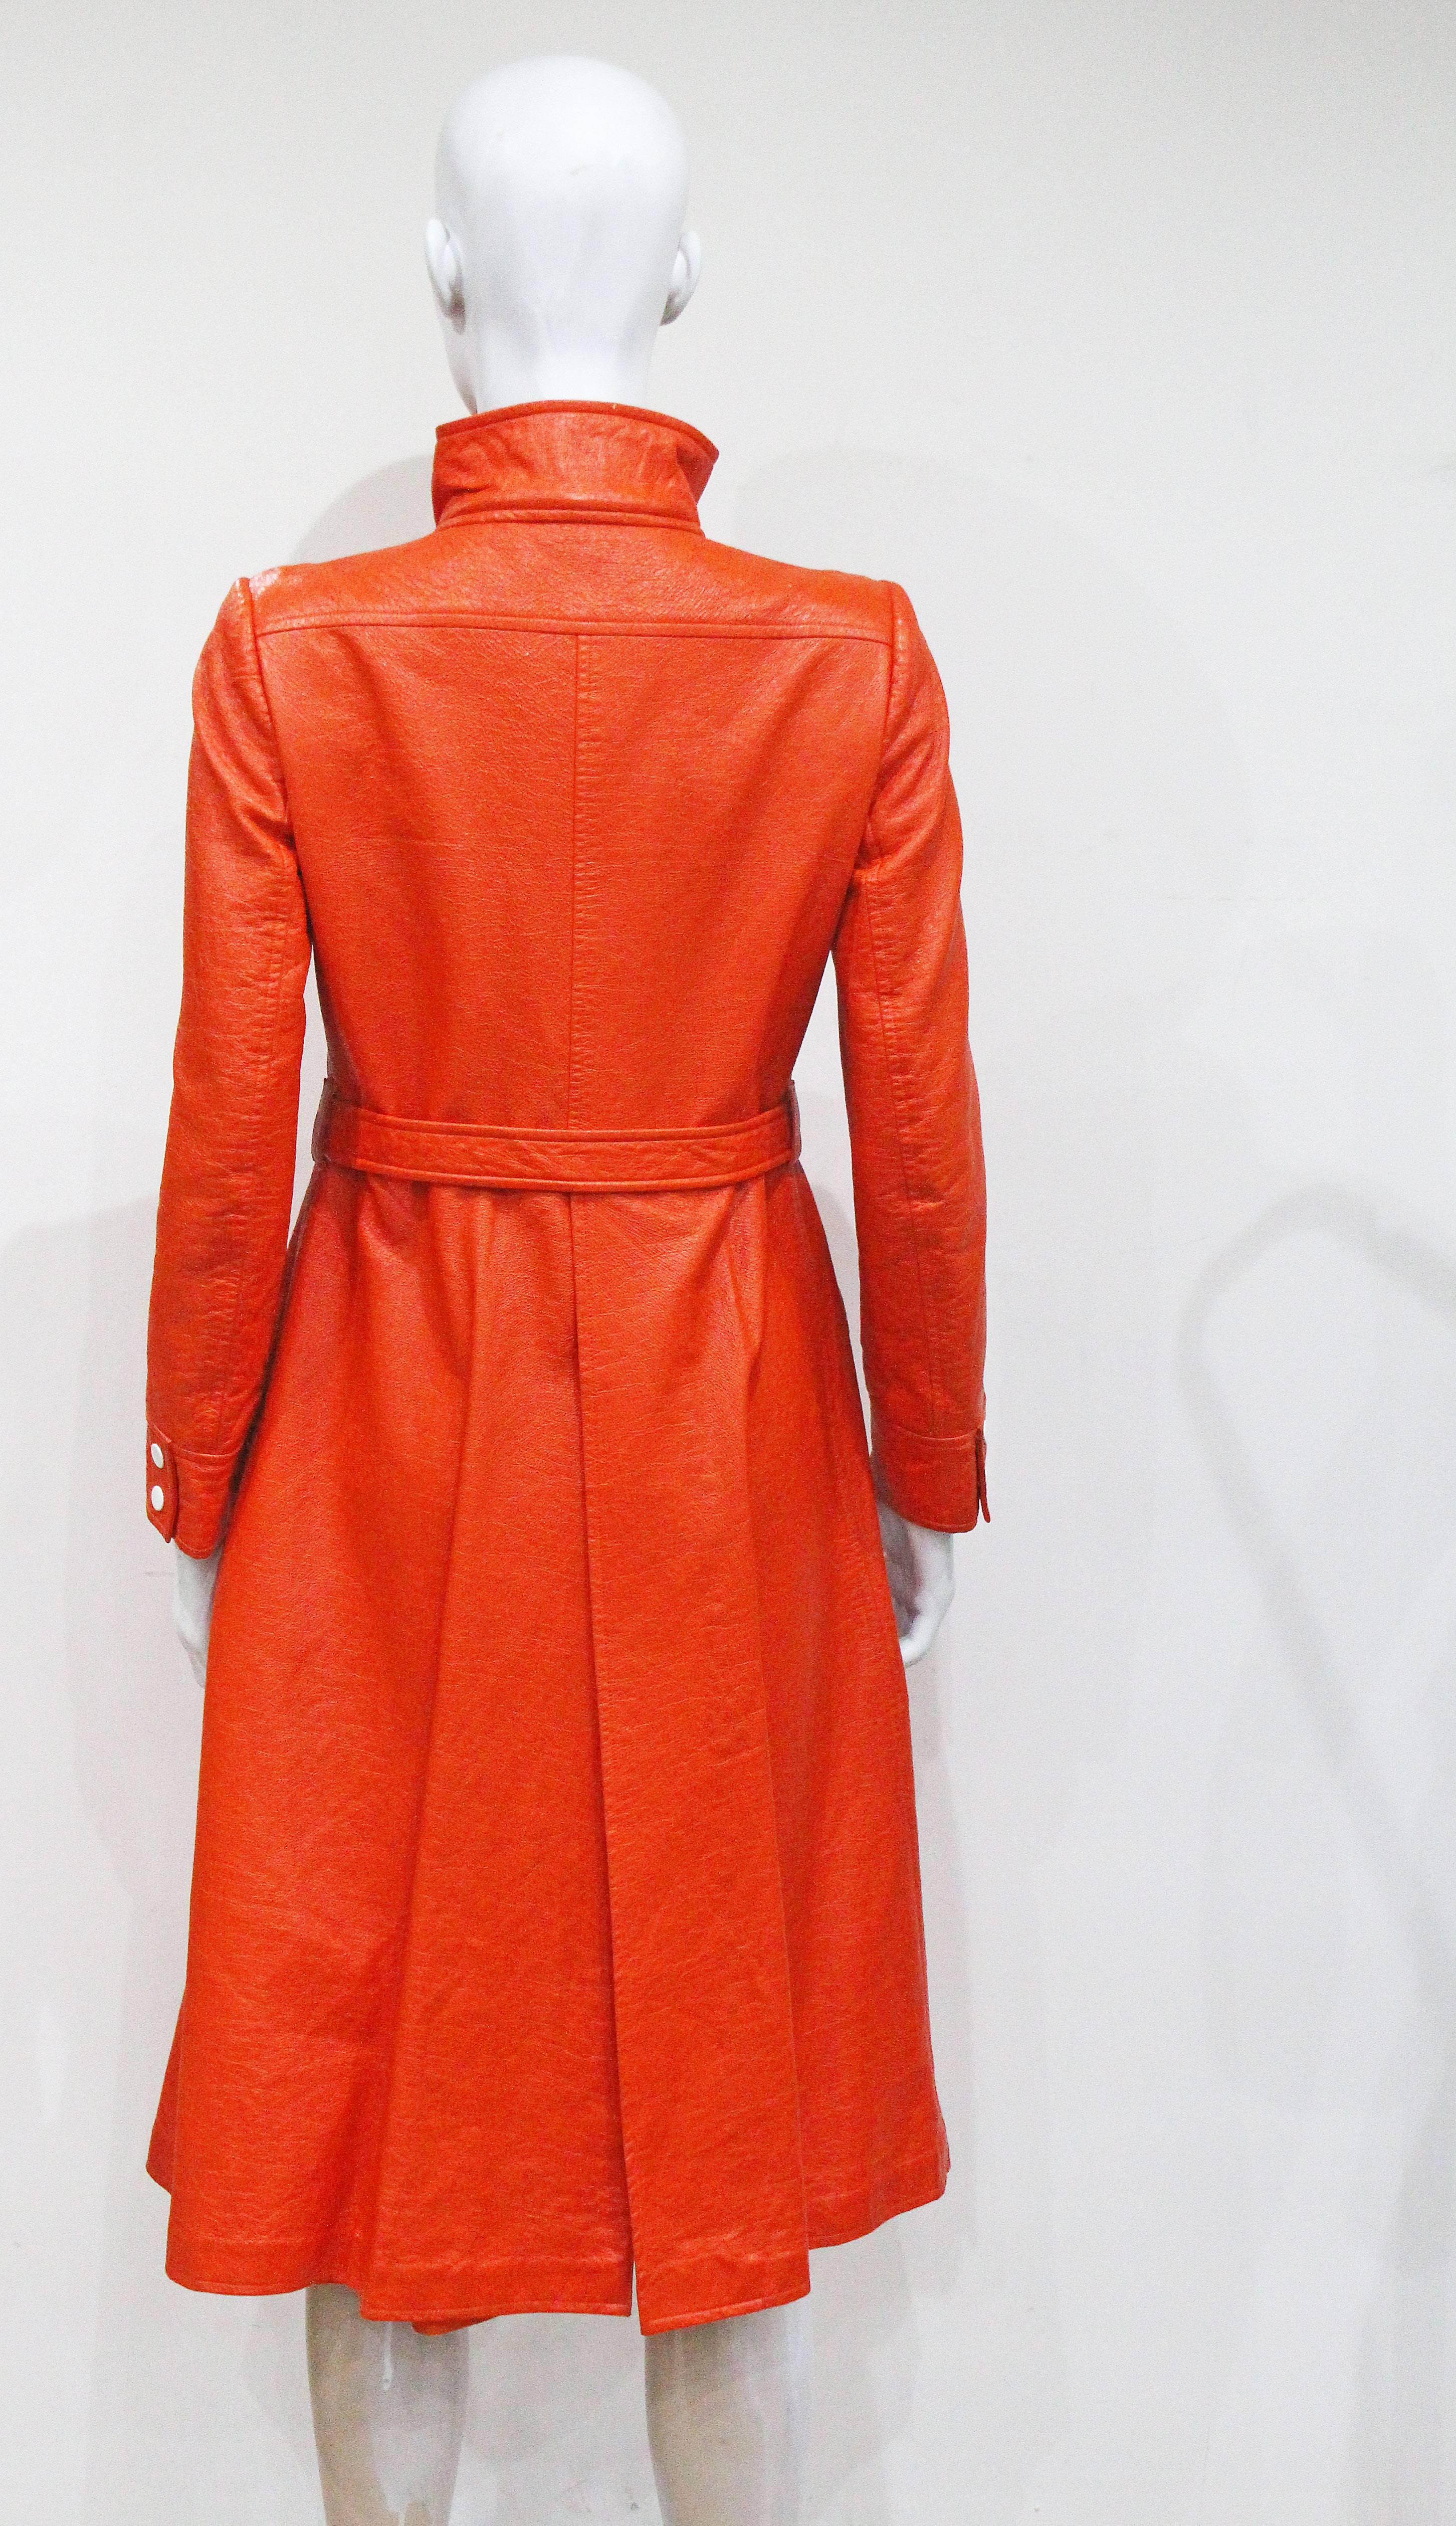 Women's Courreges orange vinyl coat dress, c. 1970